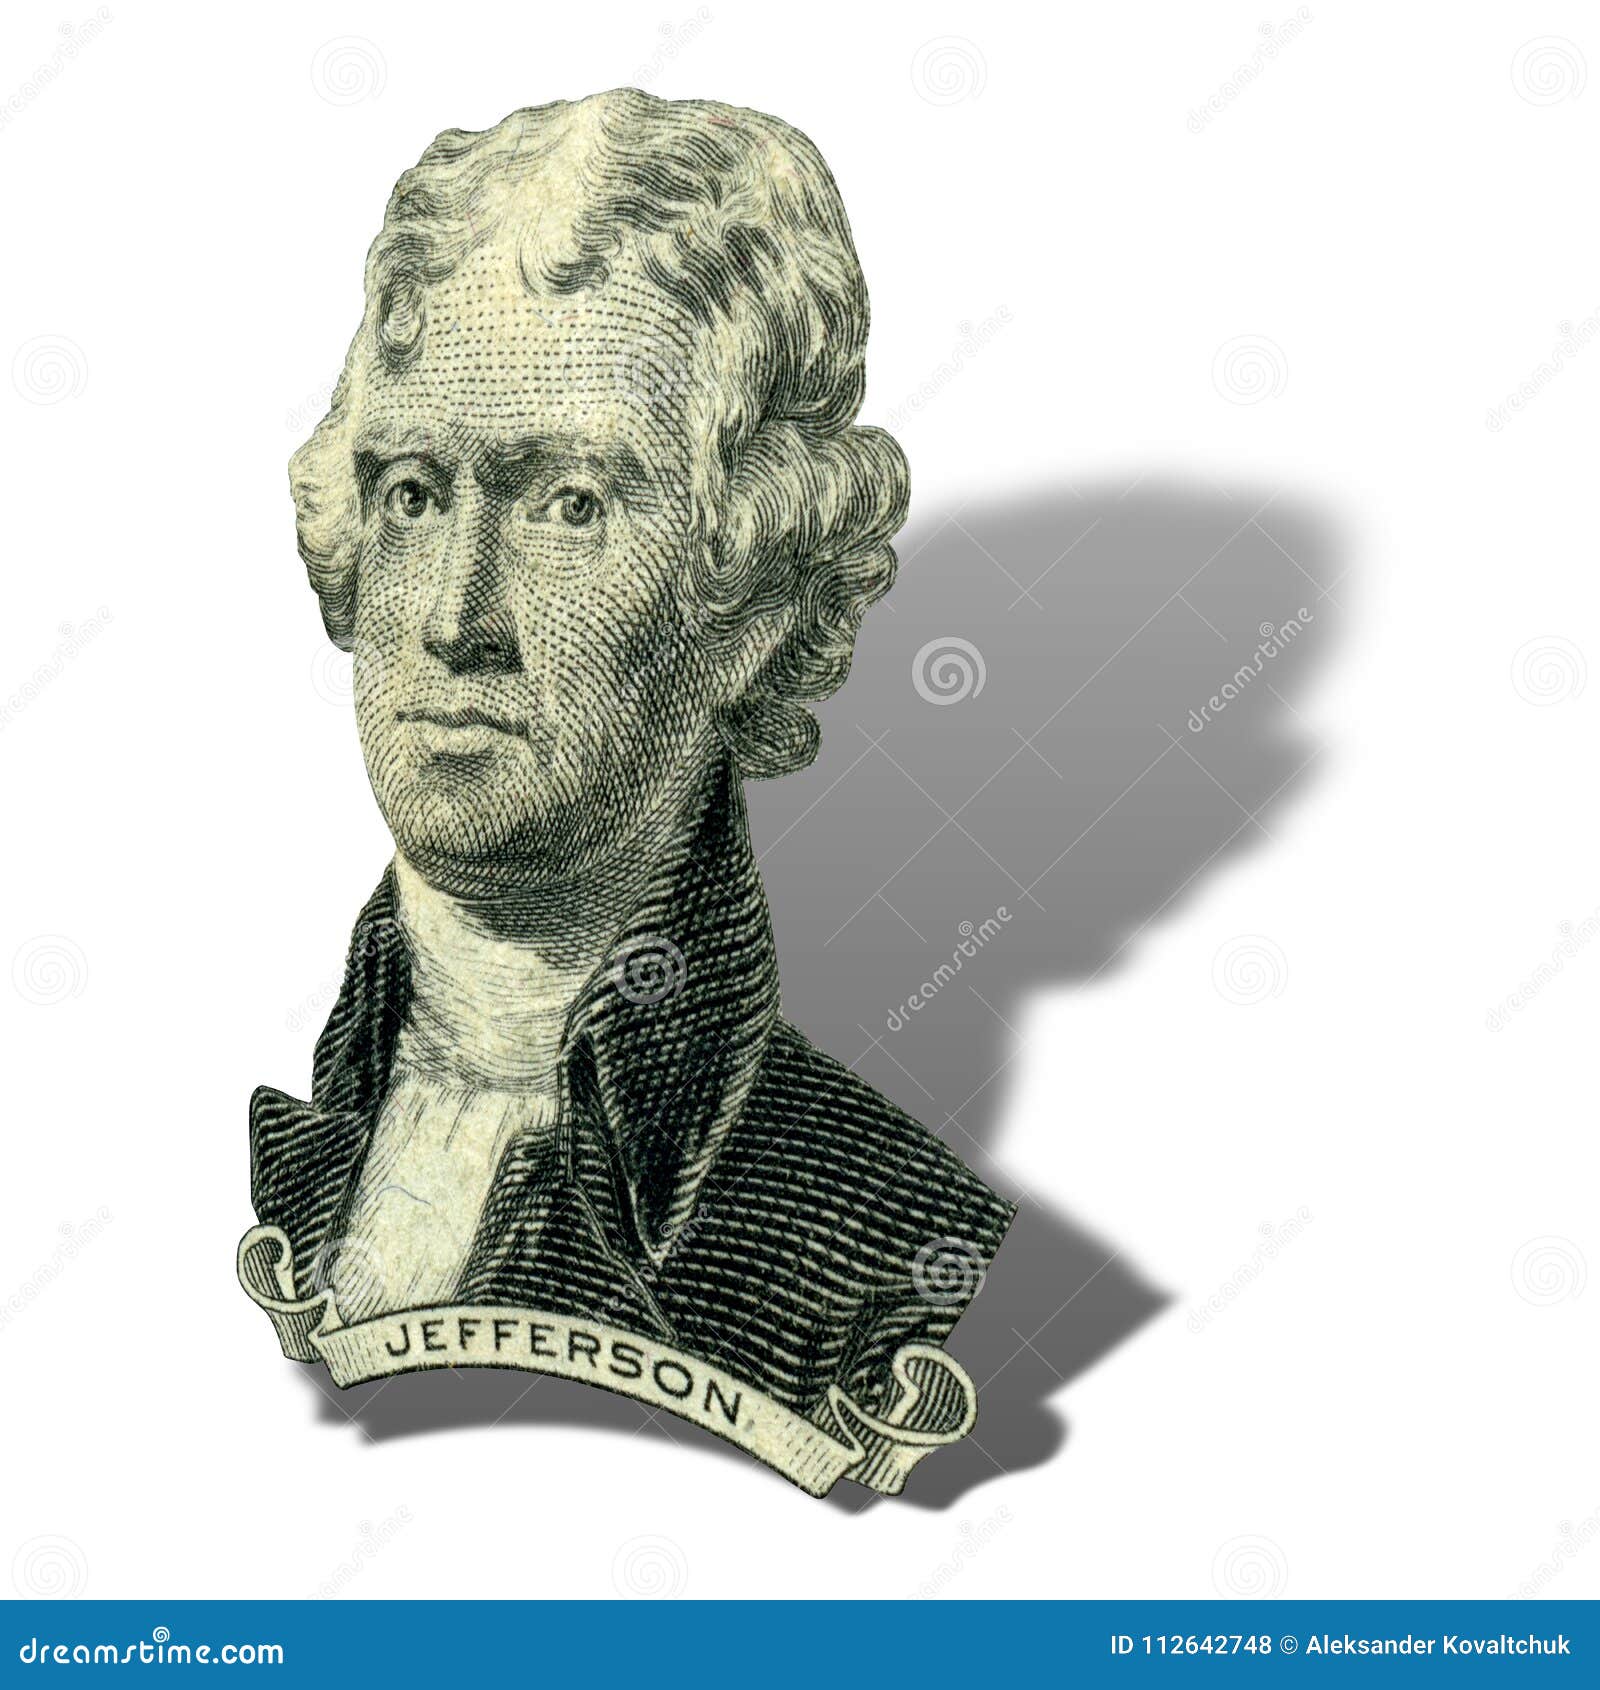 Джефферсон купюра. Thomas Jefferson 2 Dollar Bill and Nickel.